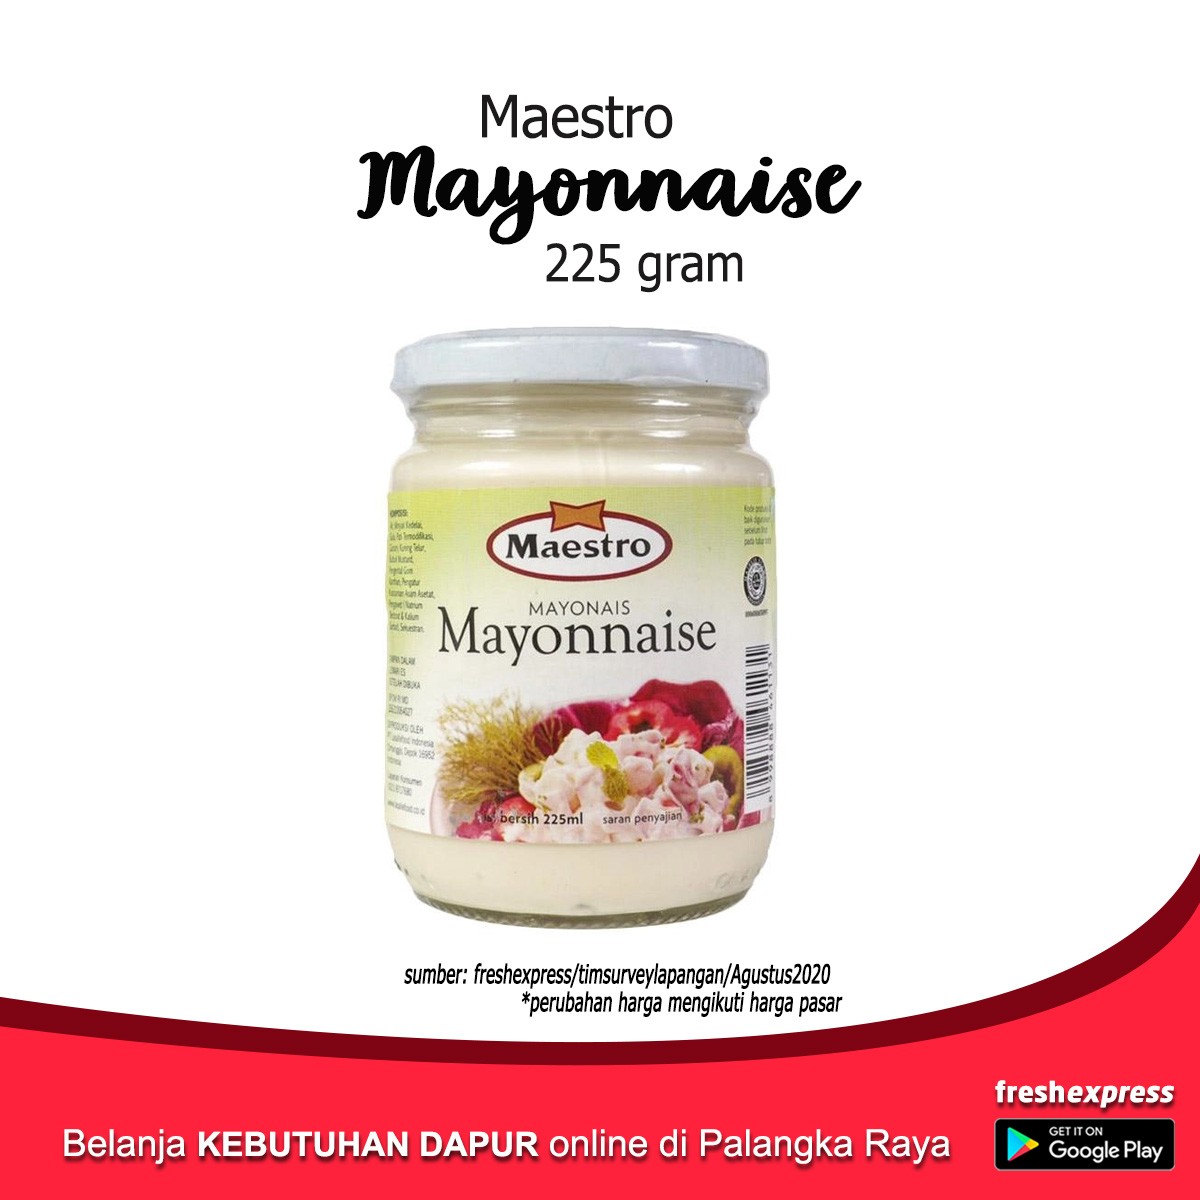 Maestro Mayonnaise 225 Gram